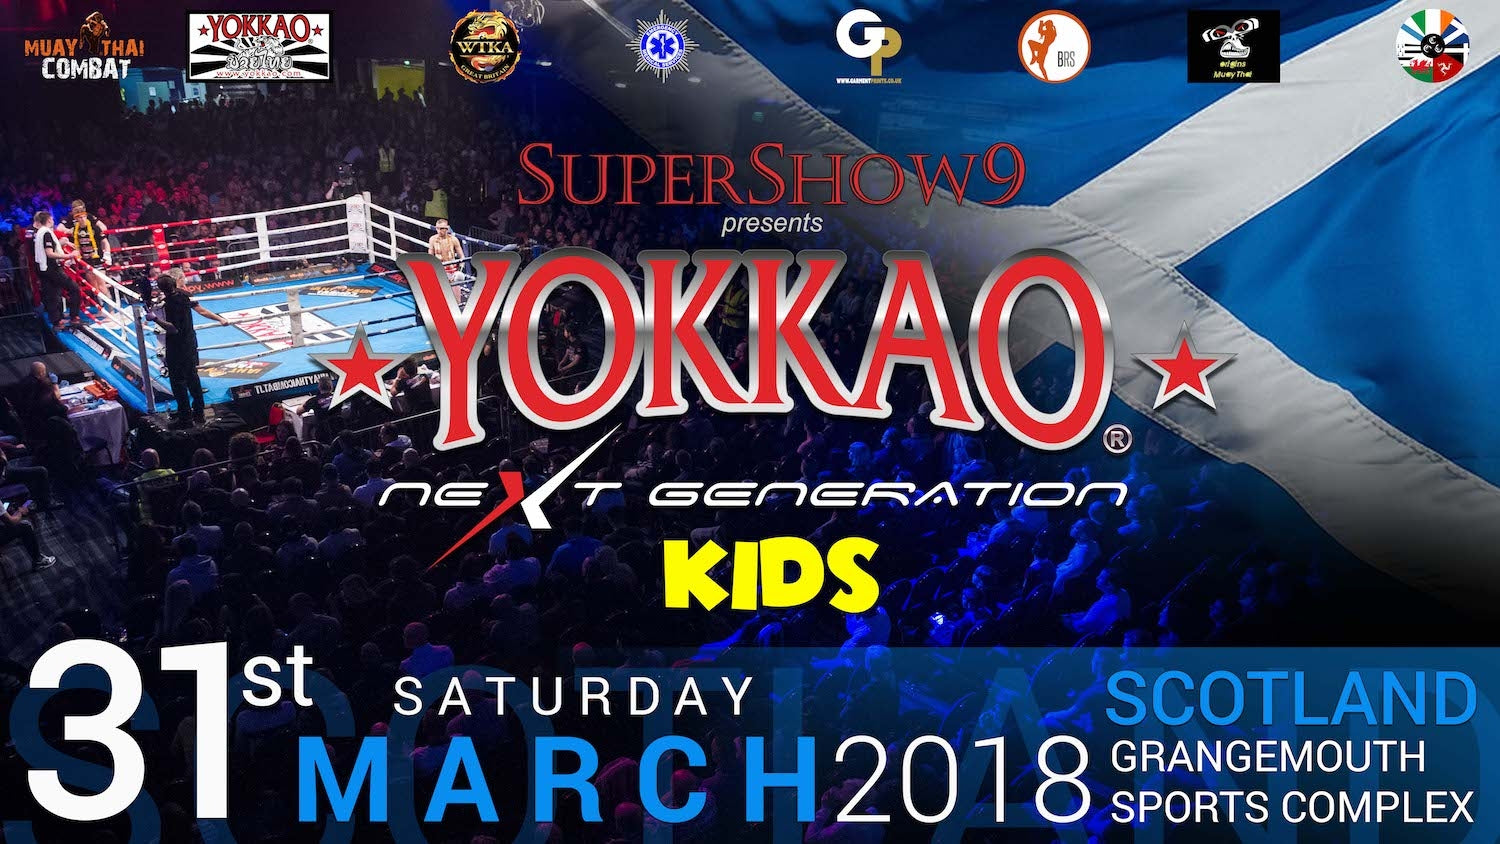 YOKKAO Next Generation Kids in Scotland